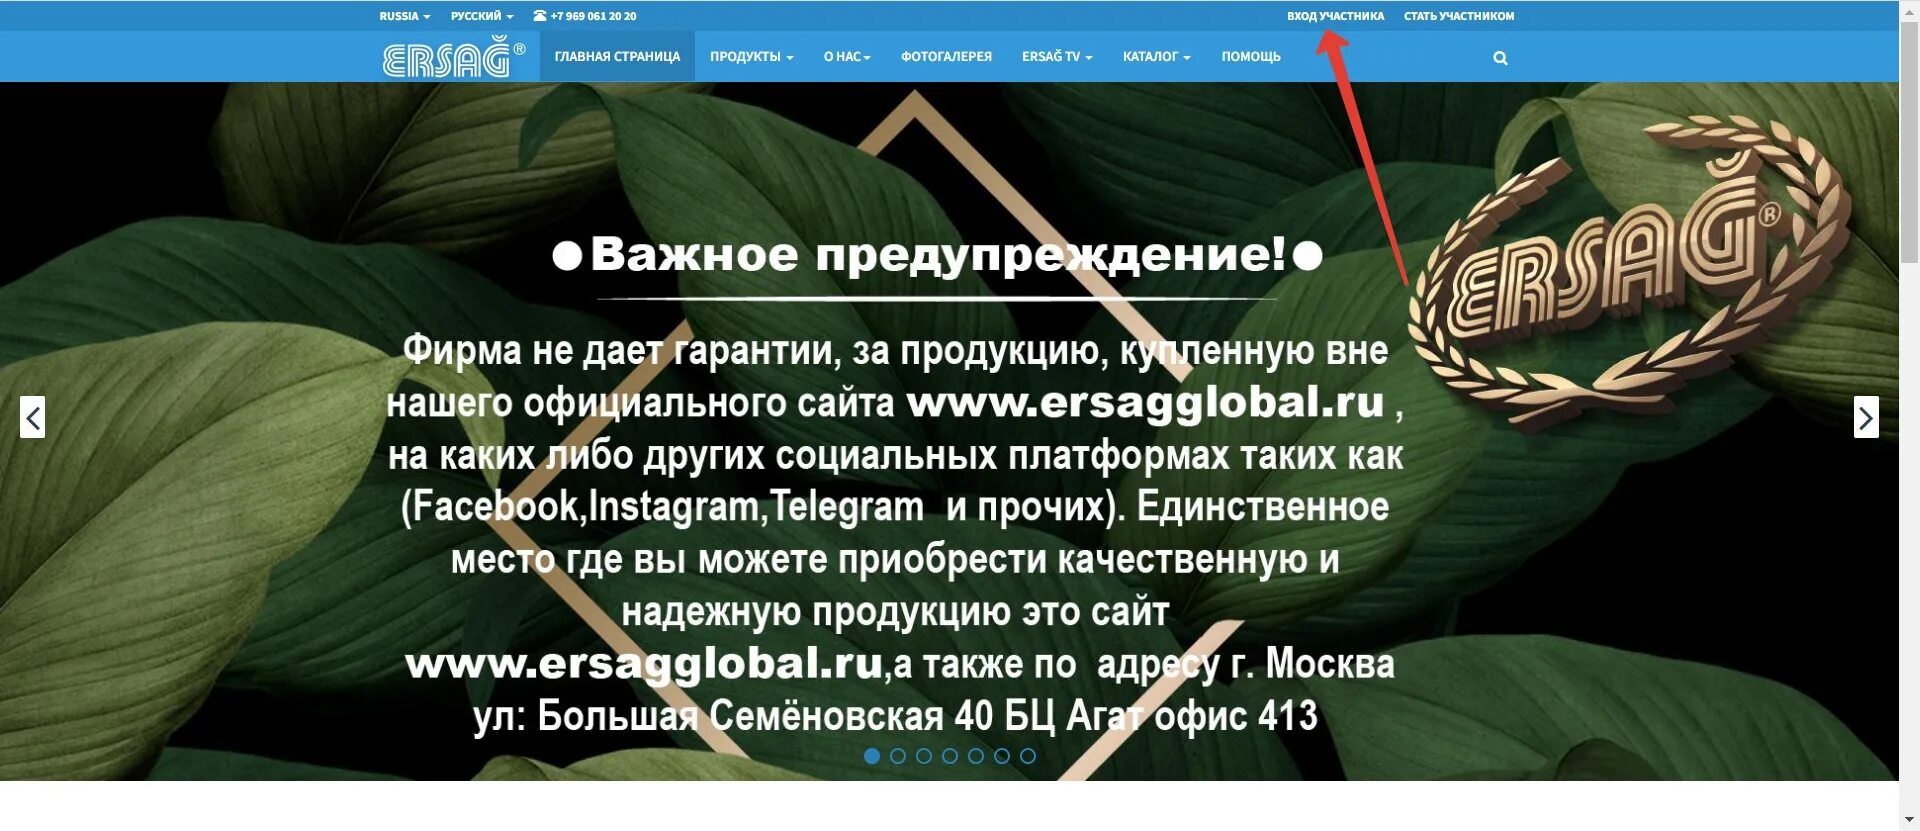 Эрсаг личный кабинет вход россия. Эко компания Эрсаг. Эрсаг визитка. Эрсаг логотип.